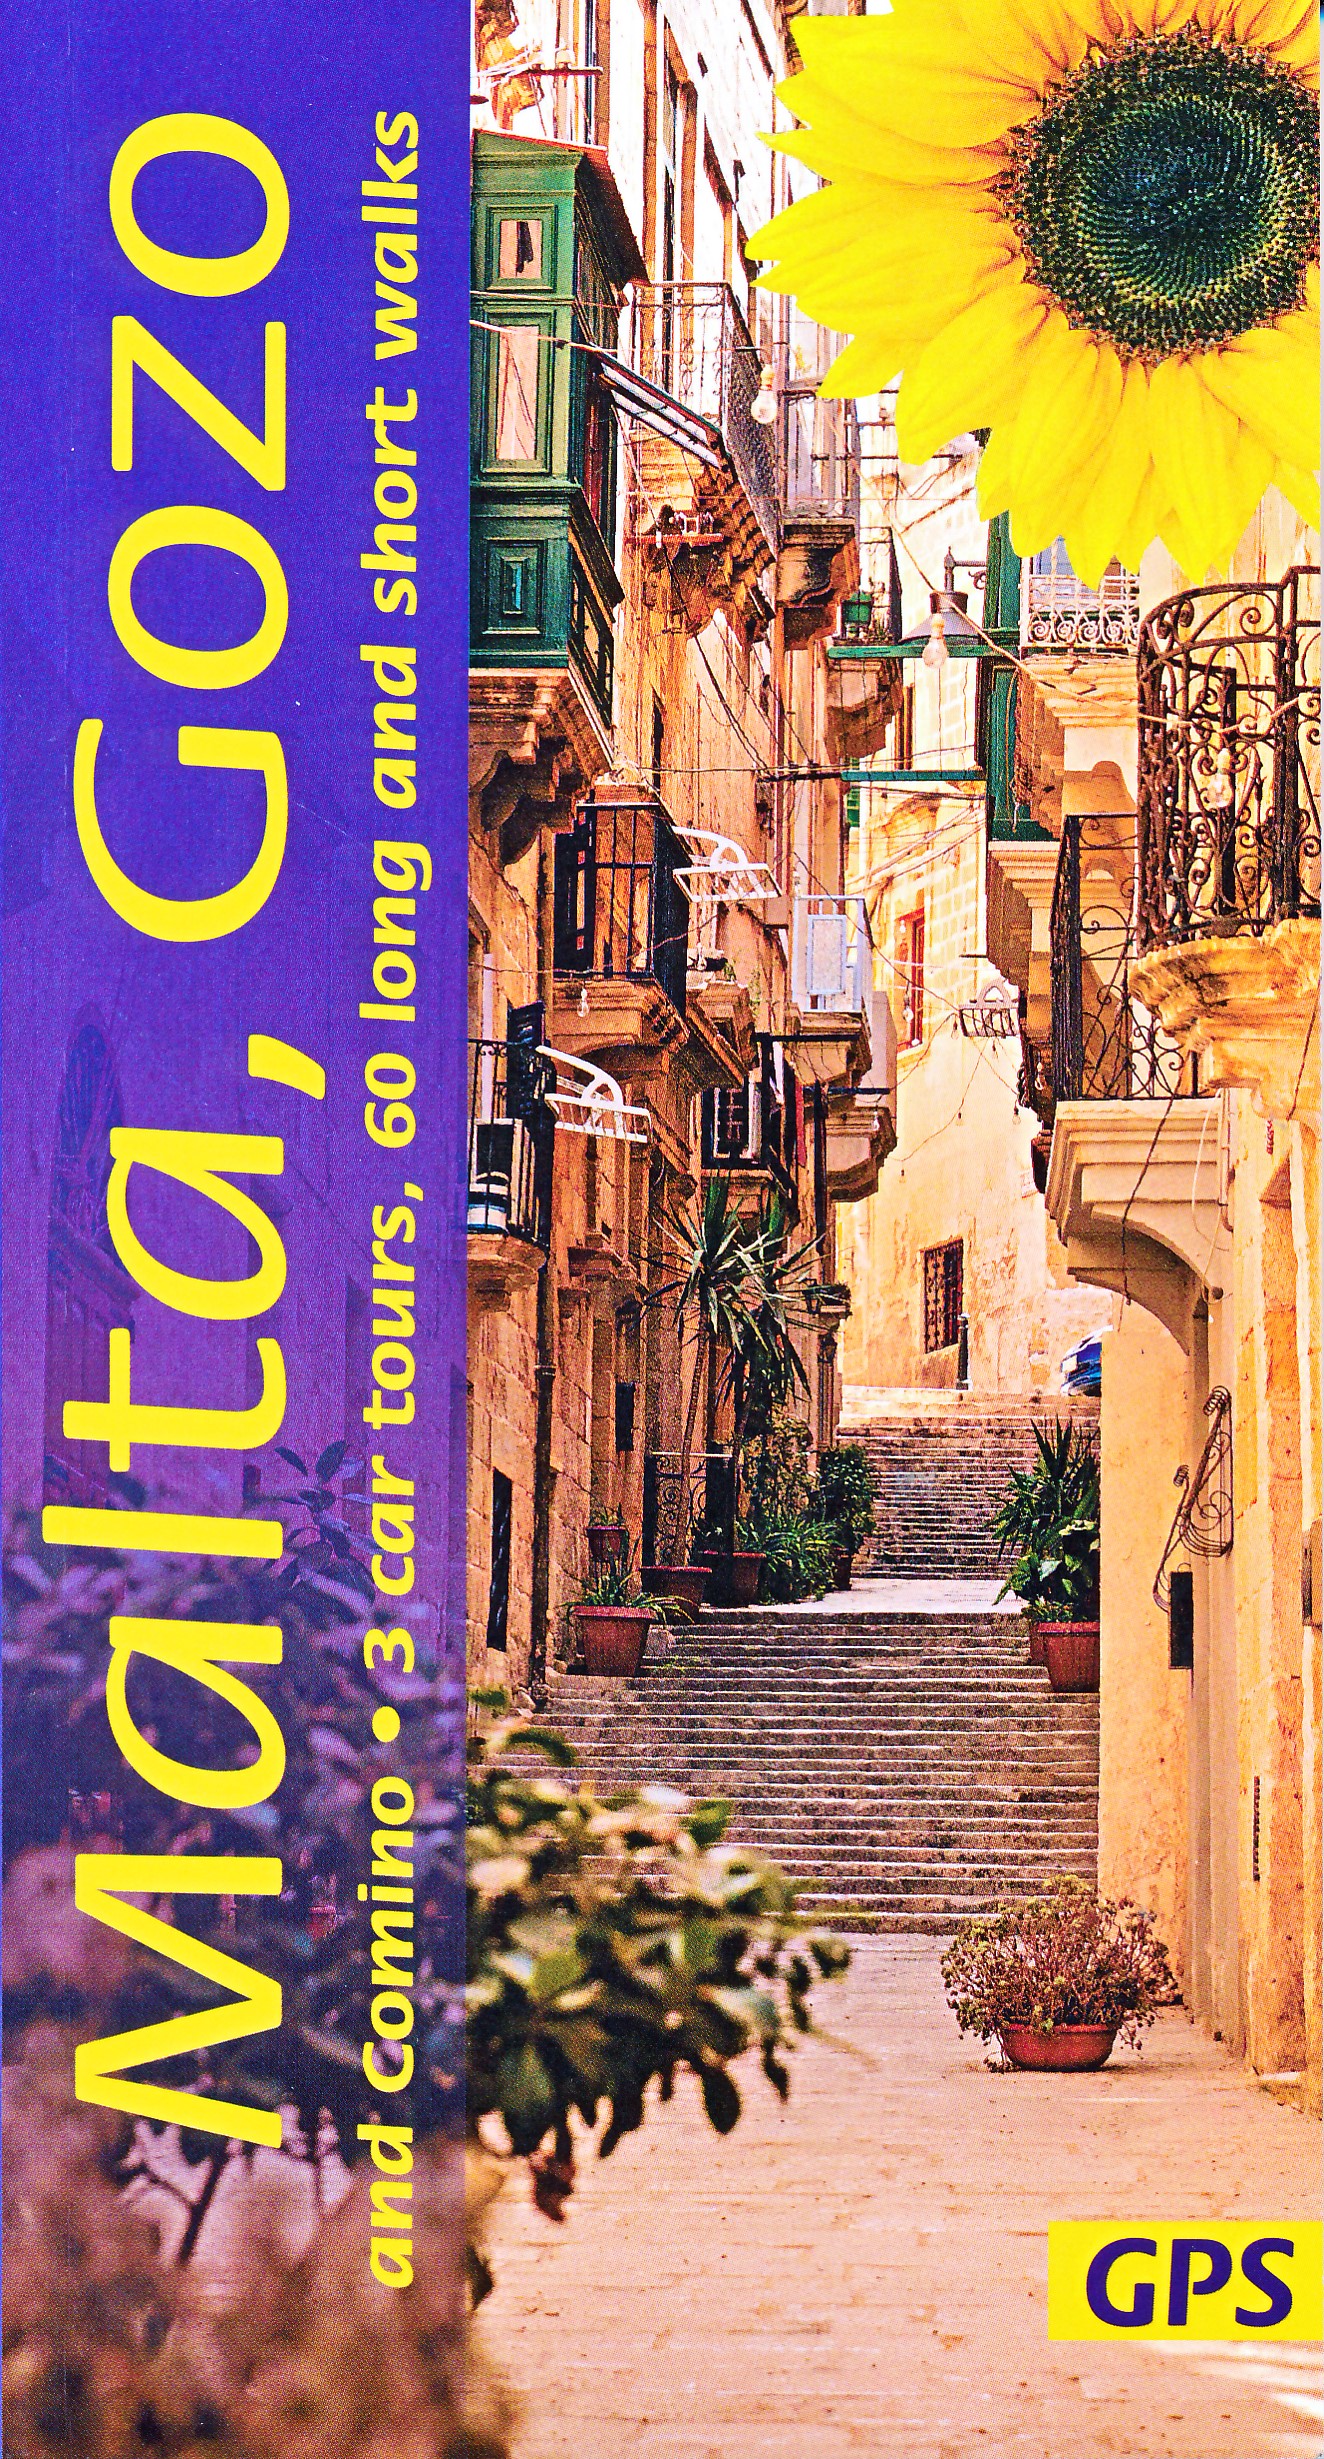 Online bestellen: Reisgids Malta - Gozo | Sunflower books